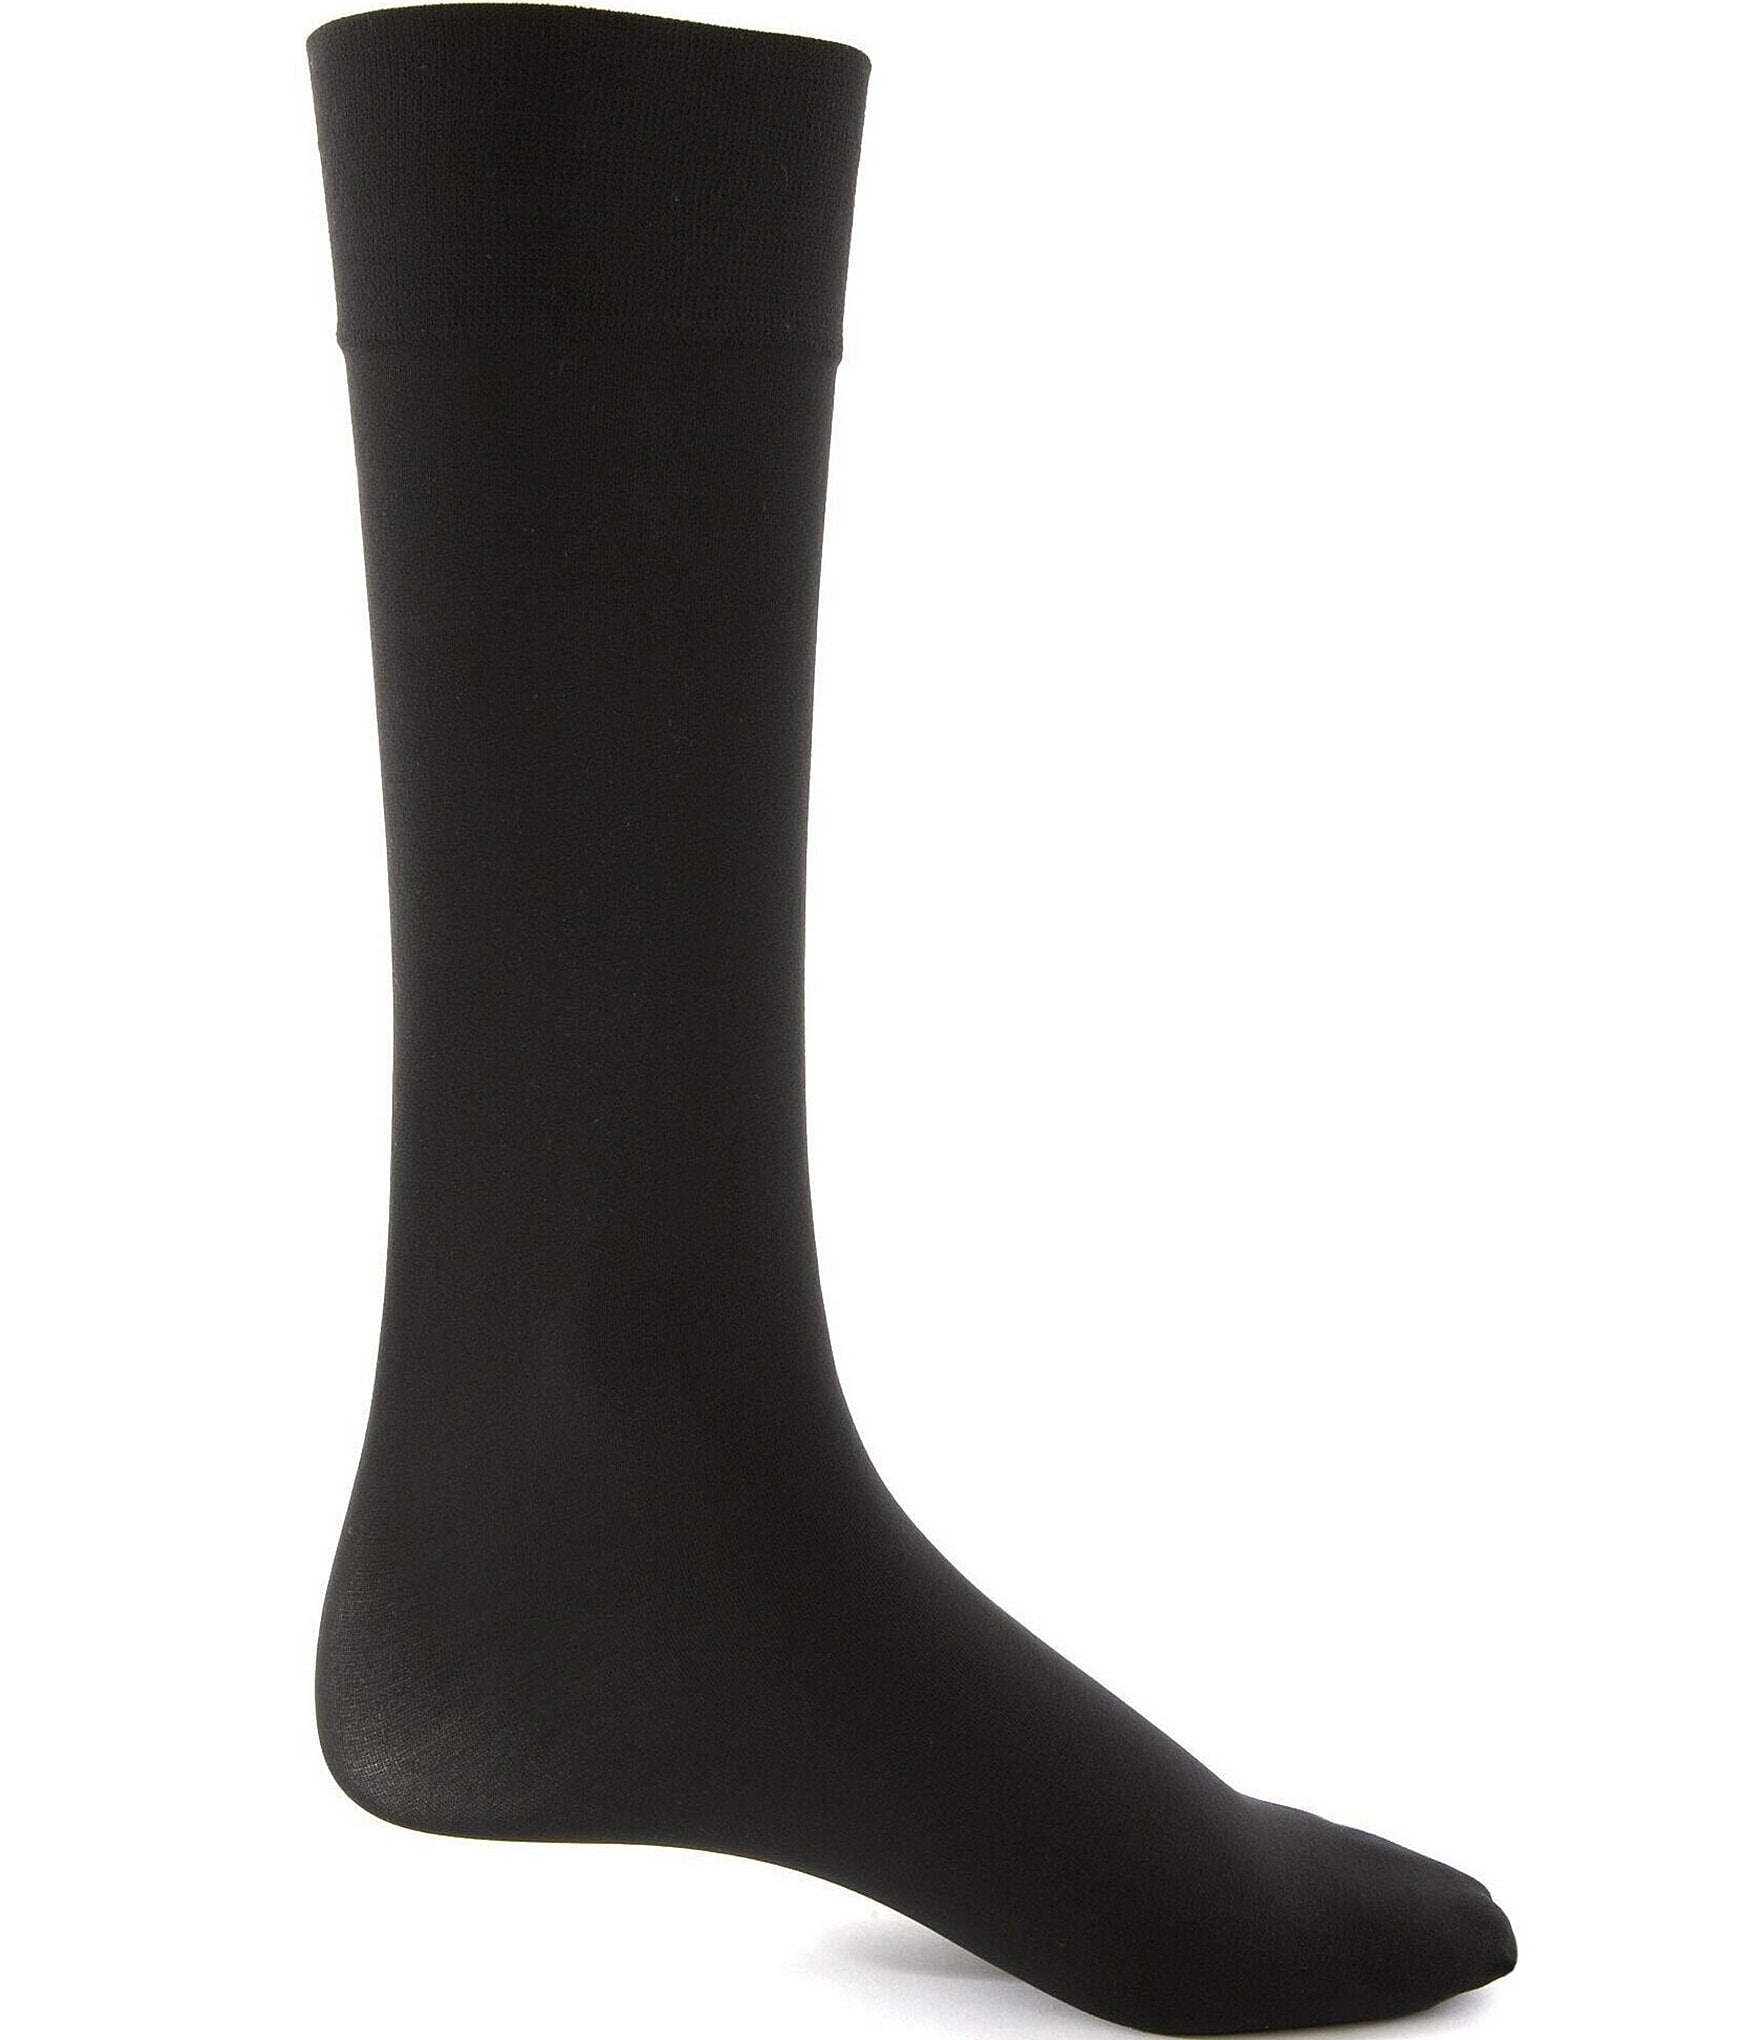 On The Go Womens Opaque Black Trouser Knee High Socks 3 pack  Walmartcom